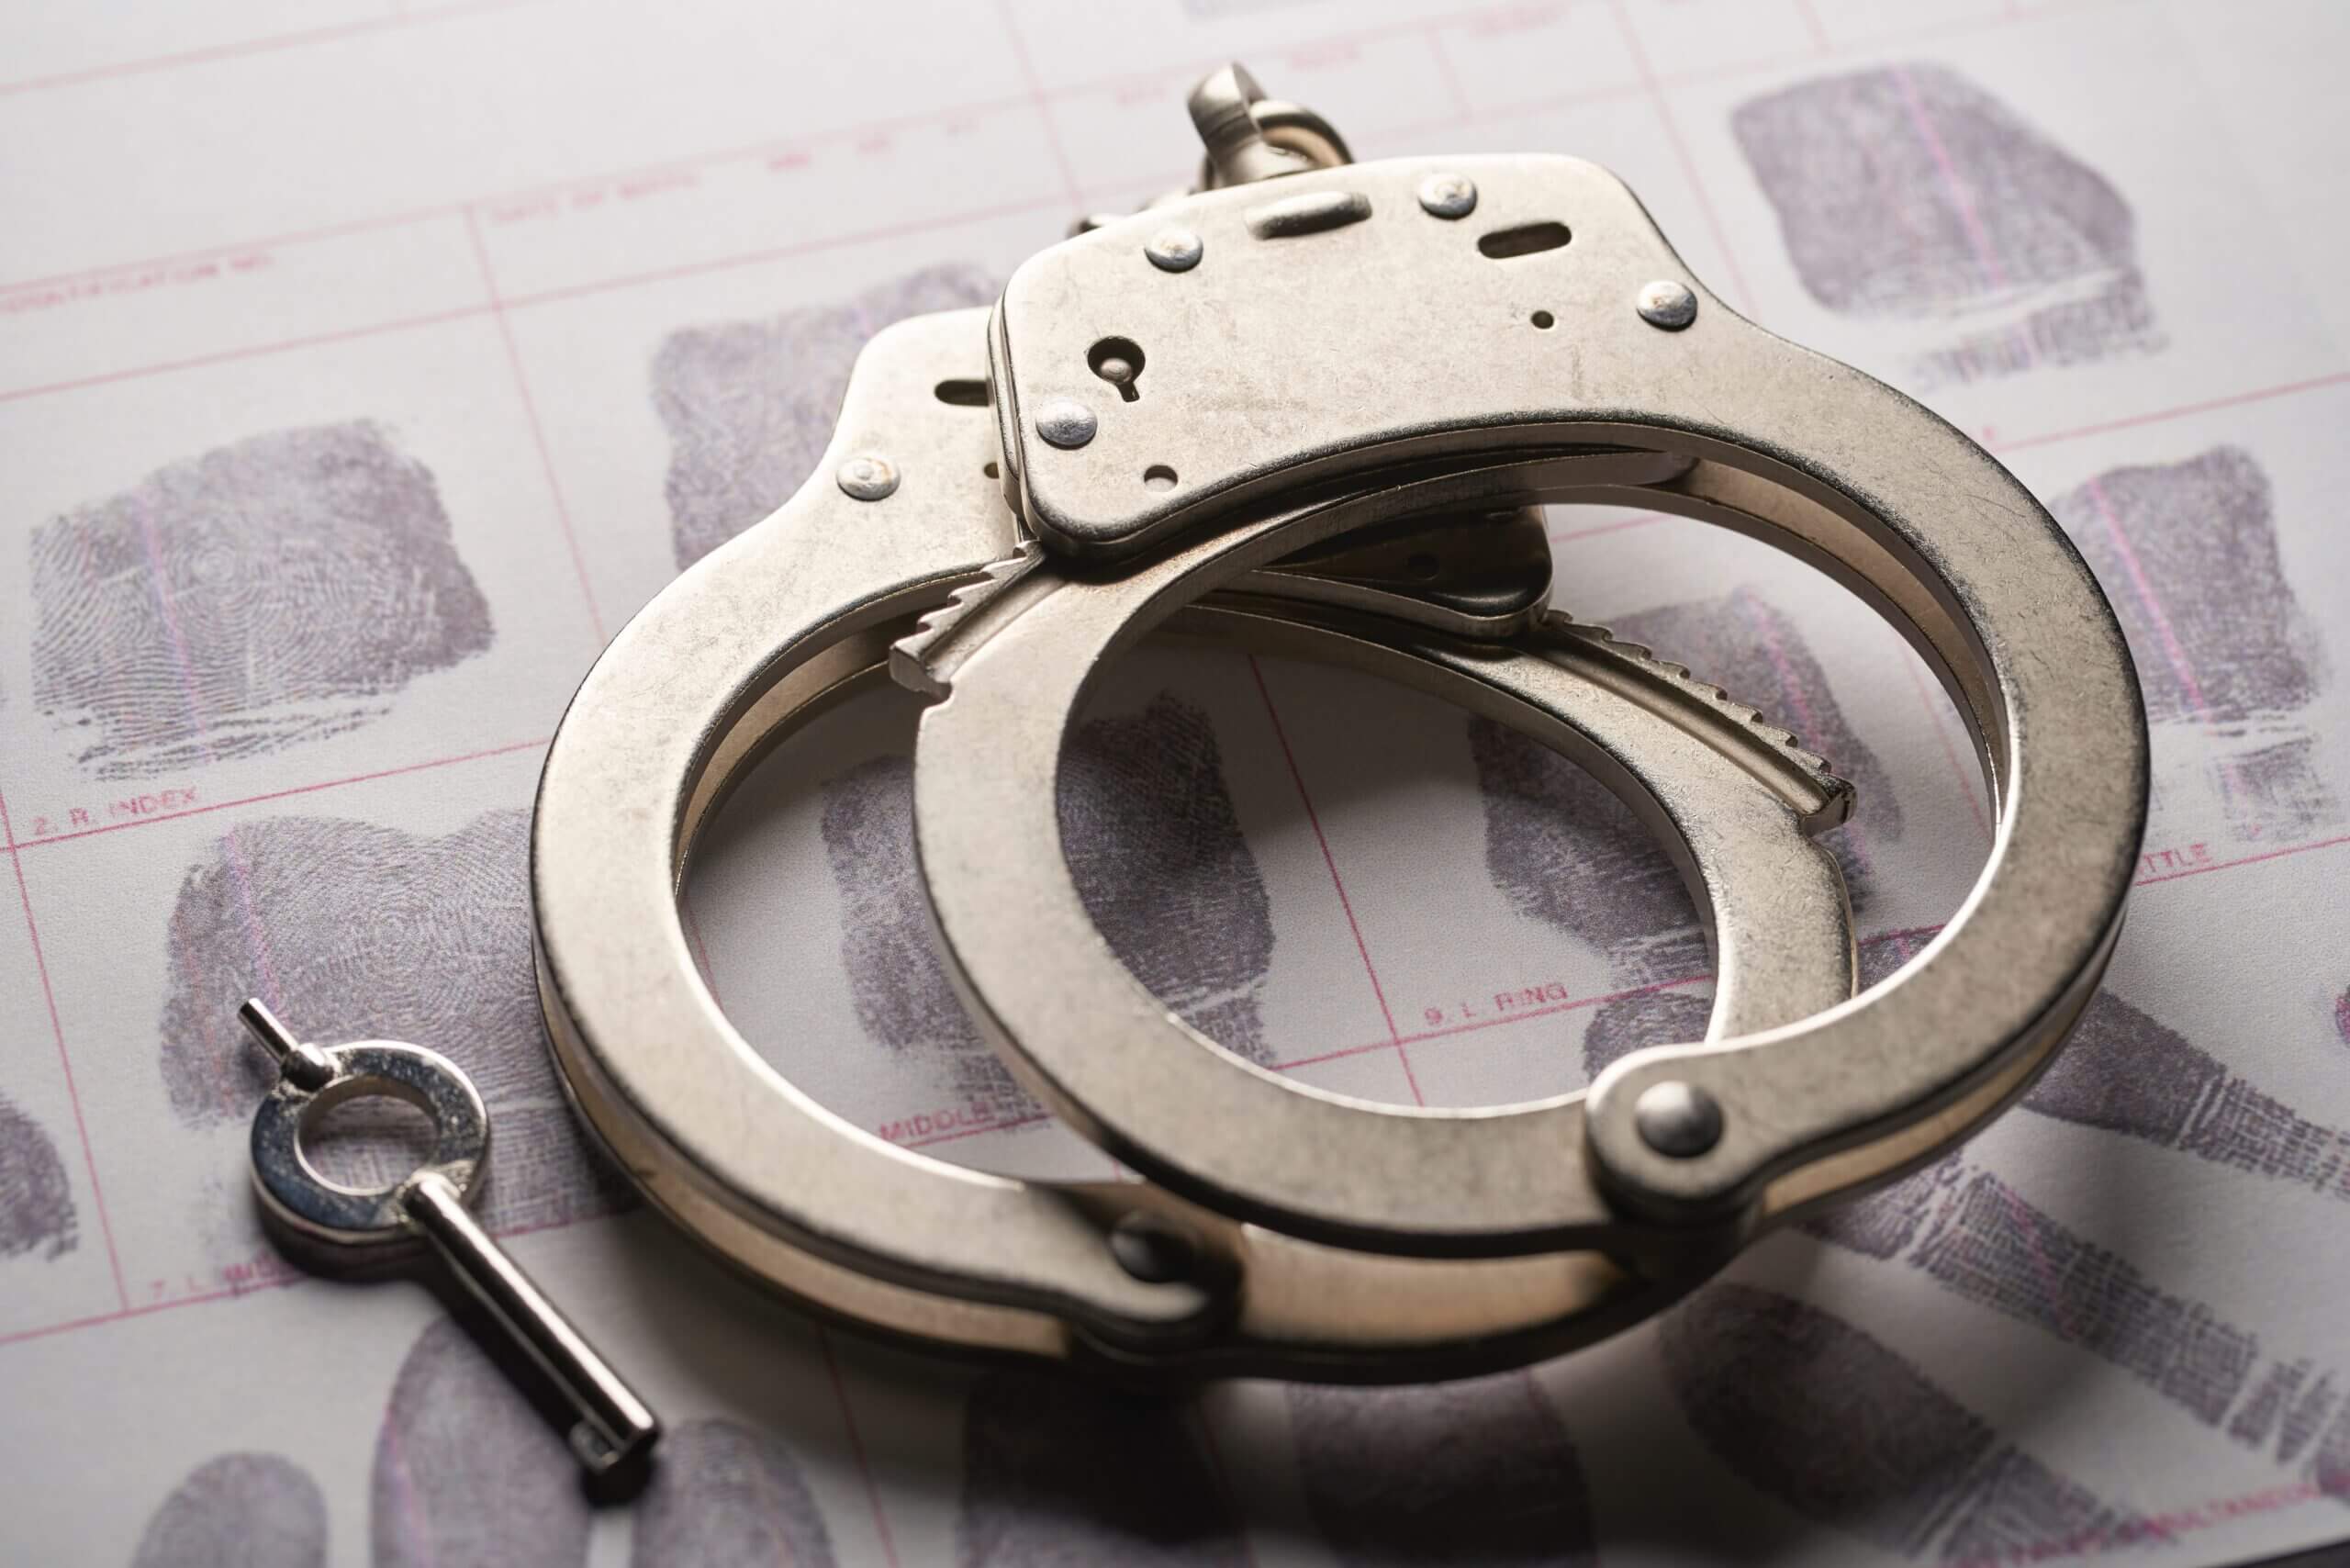 Deputy Clerk arrested for embezzlement in Lamar County